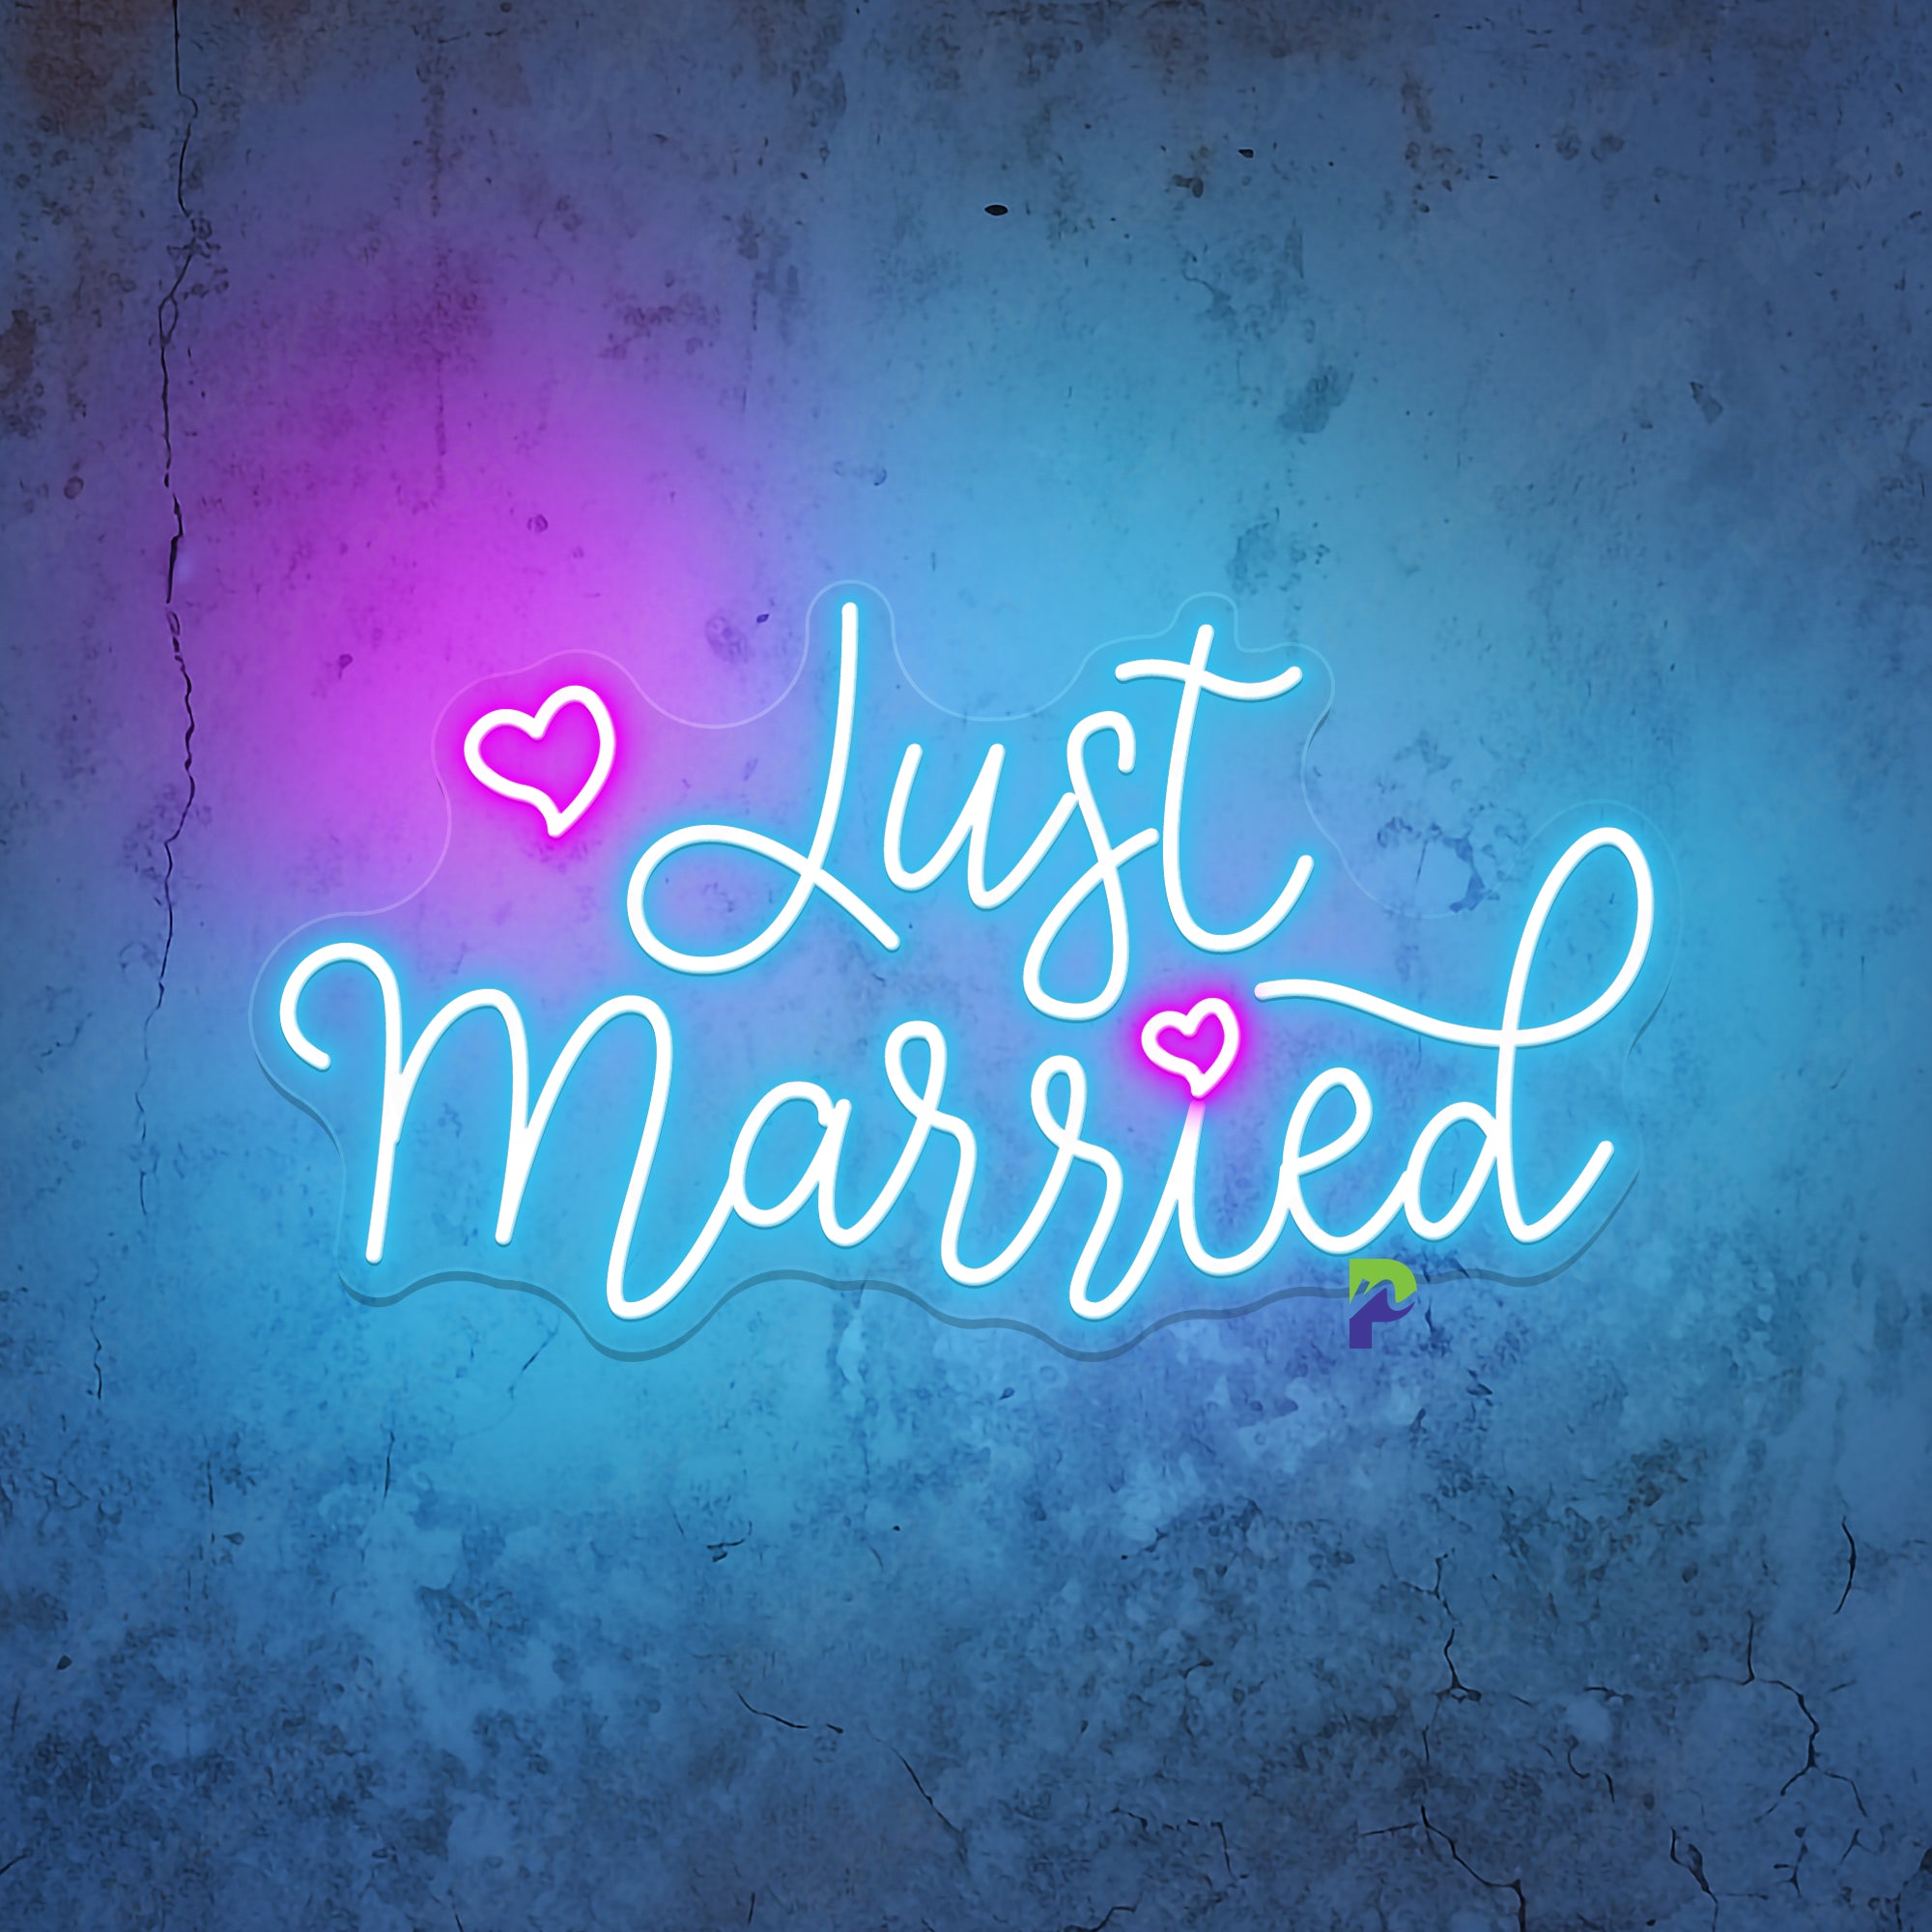 Just Married Neon Sign Lovely Wedding Led Light